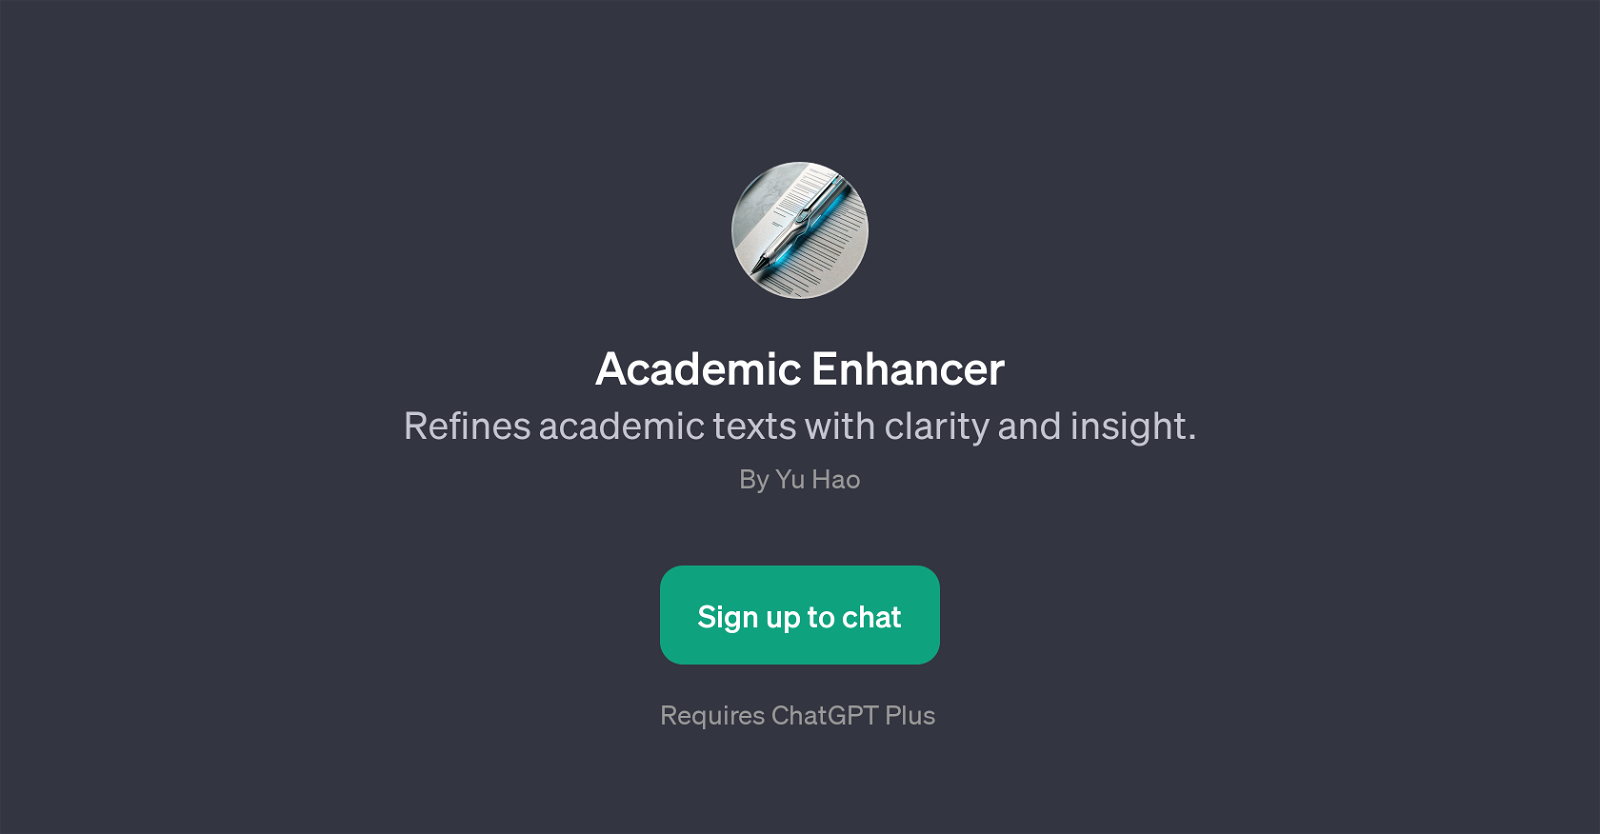 Academic Enhancer website